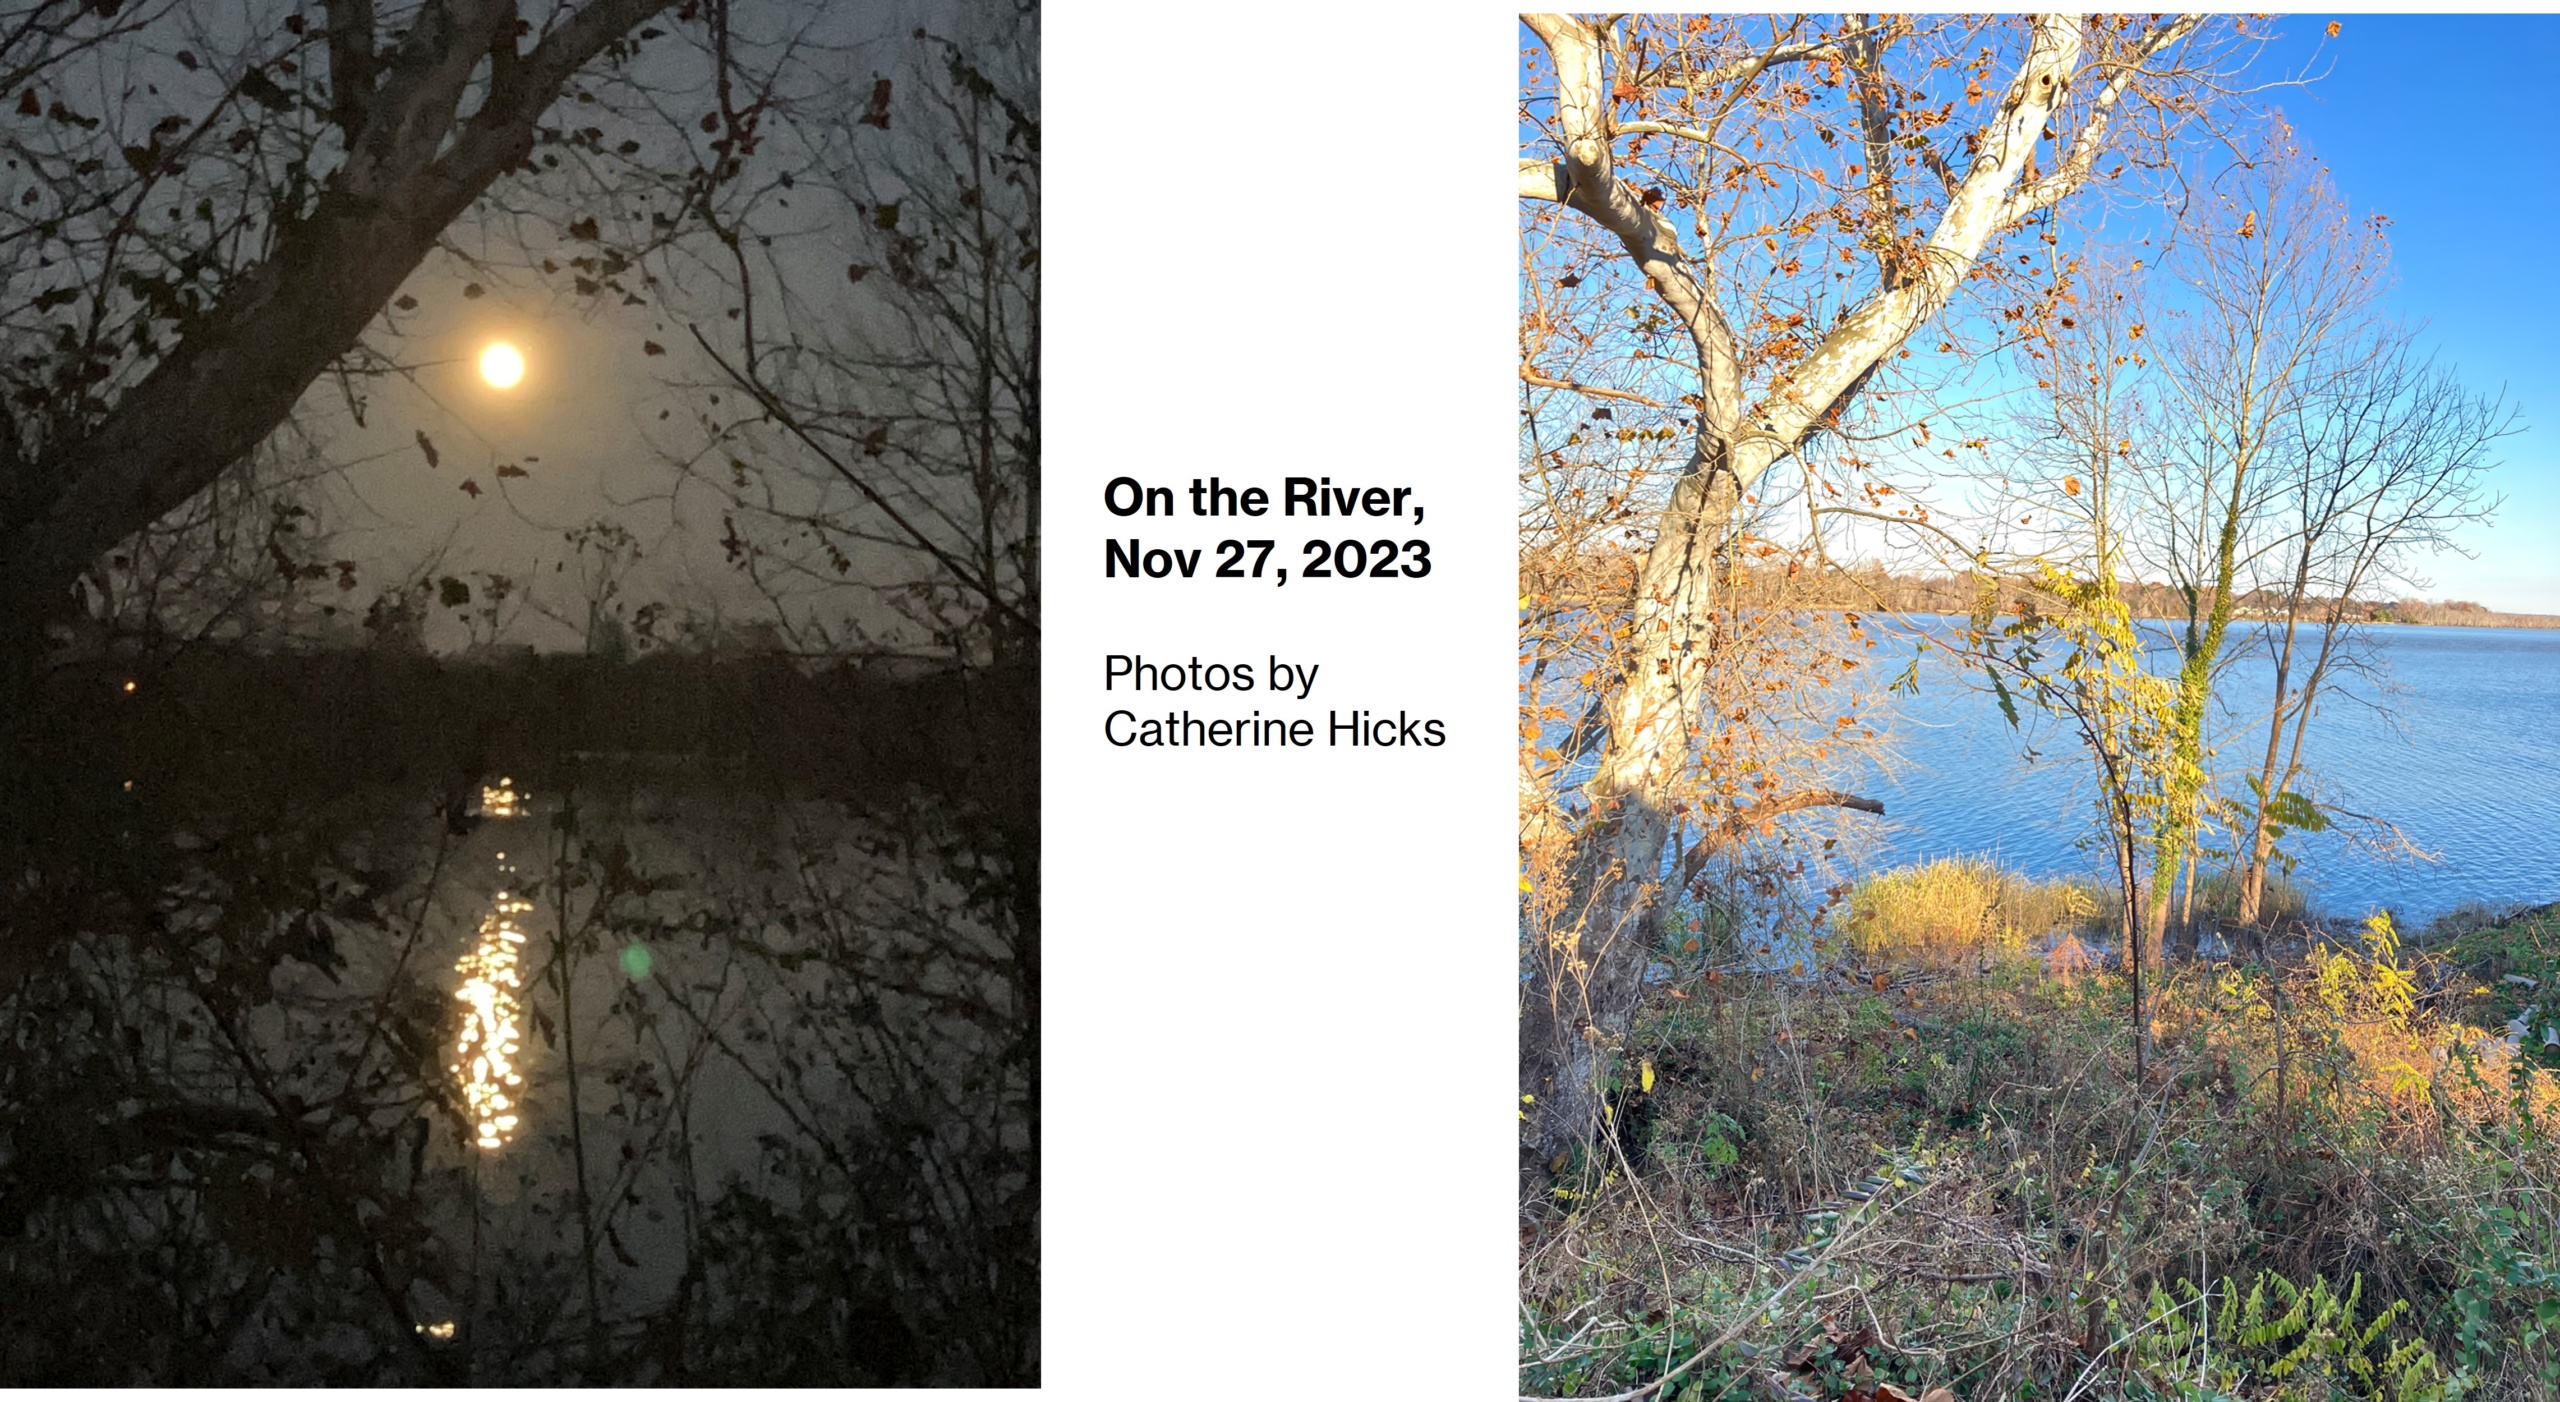 Nov 27 - On the River